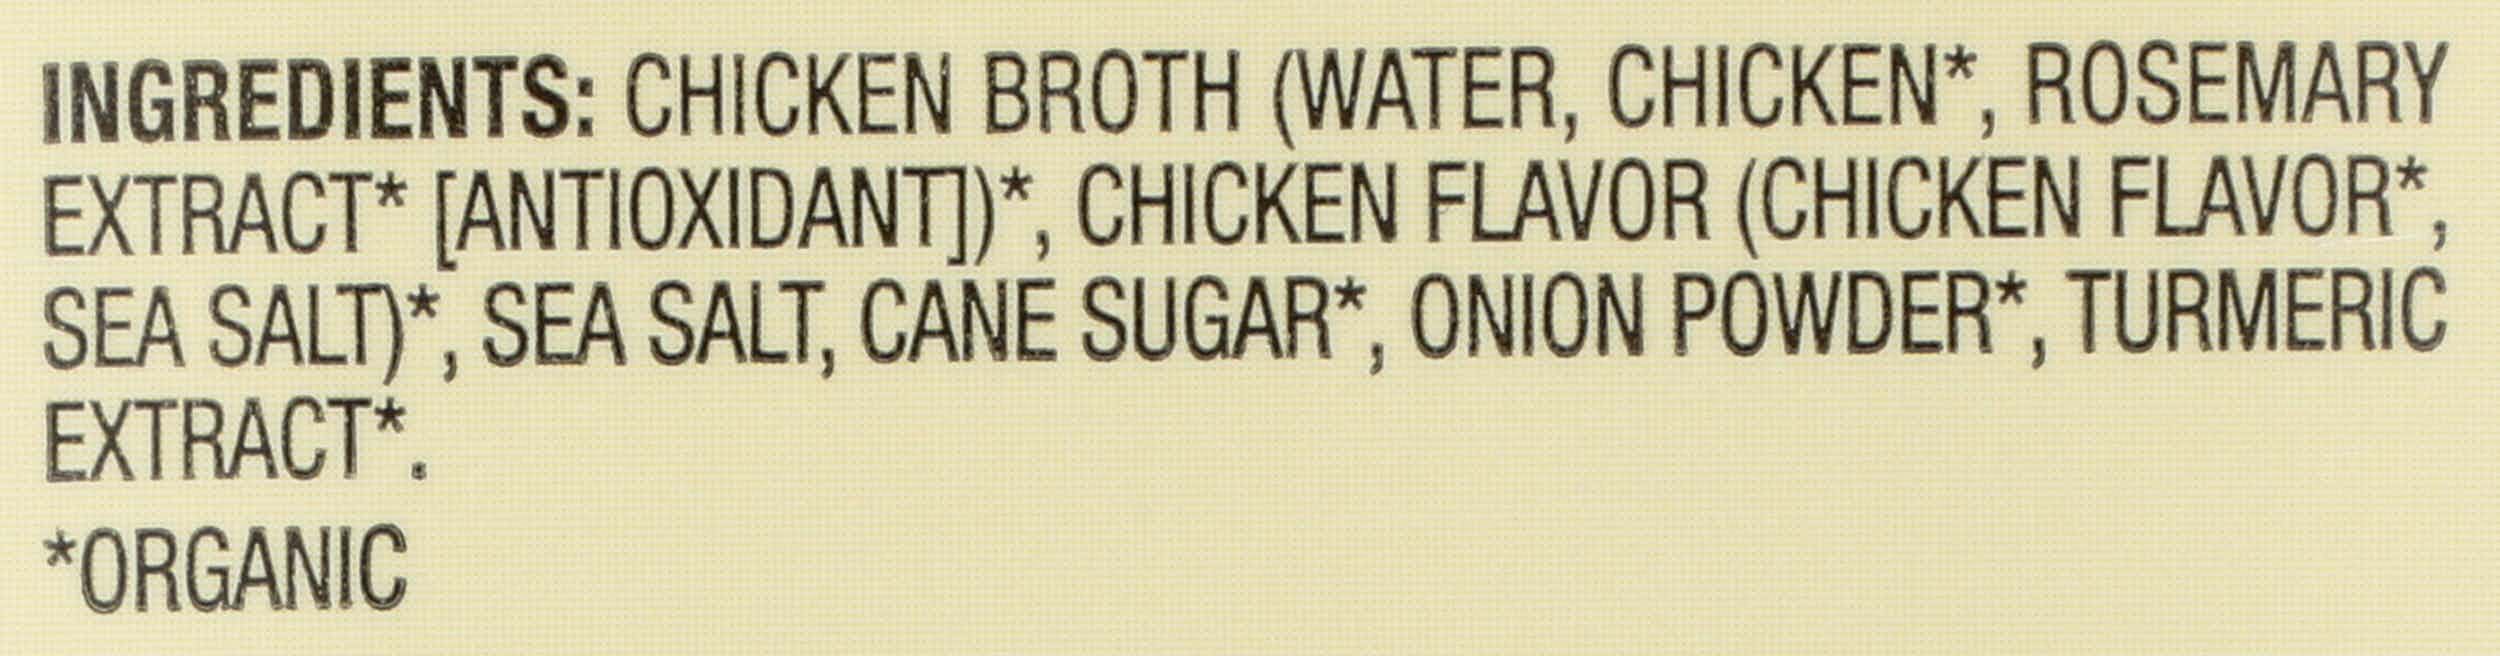 Pacific Foods Organic Free Range Chicken Broth